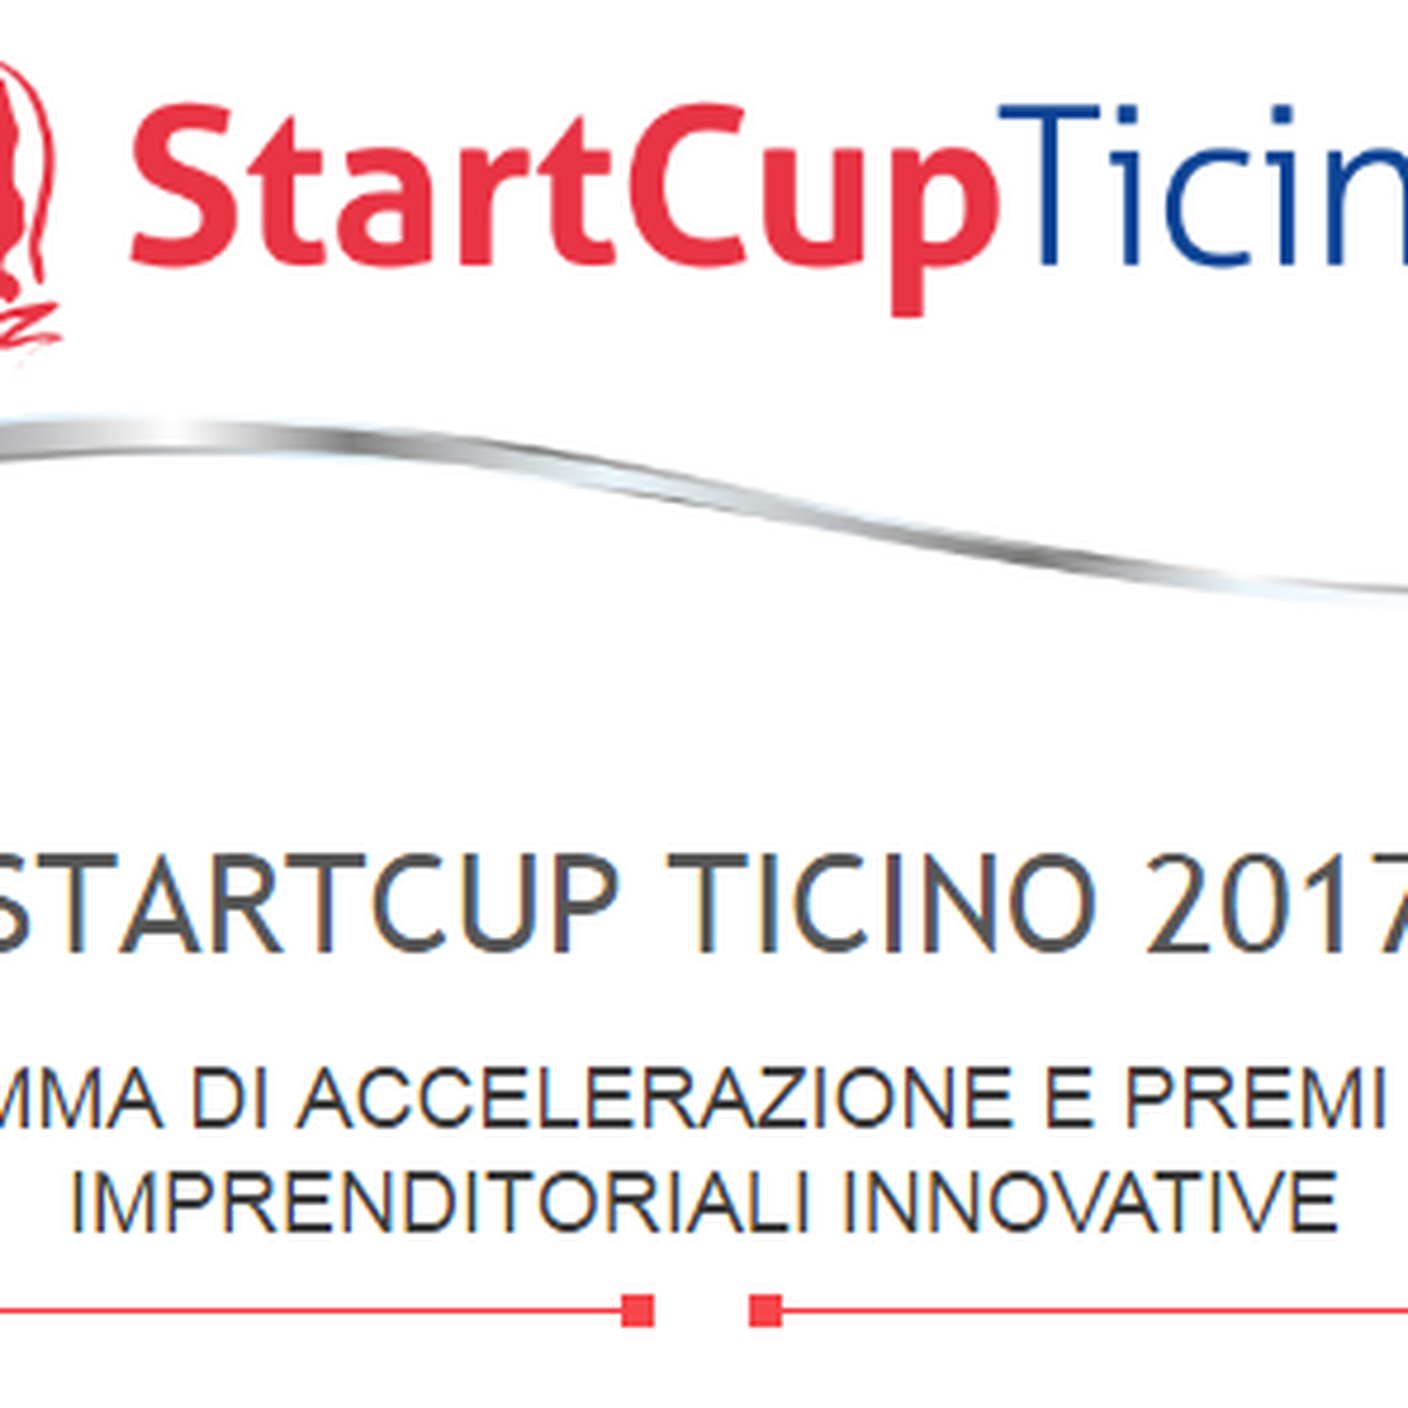 StartCup Ticino